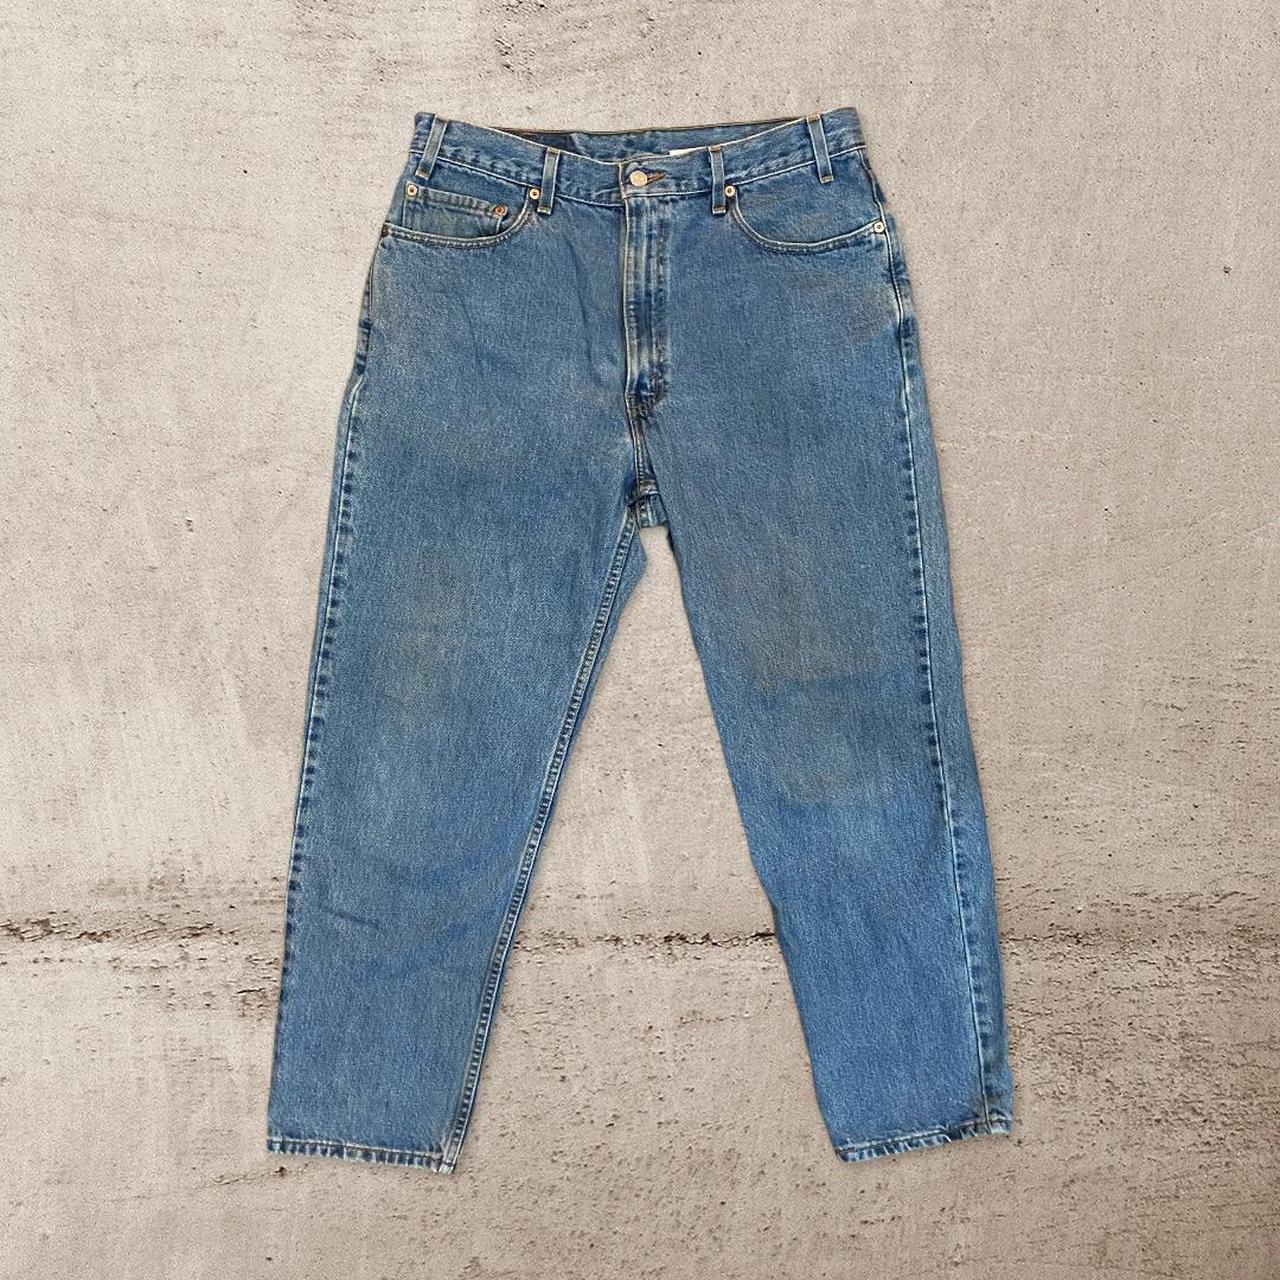 Vintage Levis 550 Relaxed Fit Denim Blue Jeans 90s Depop